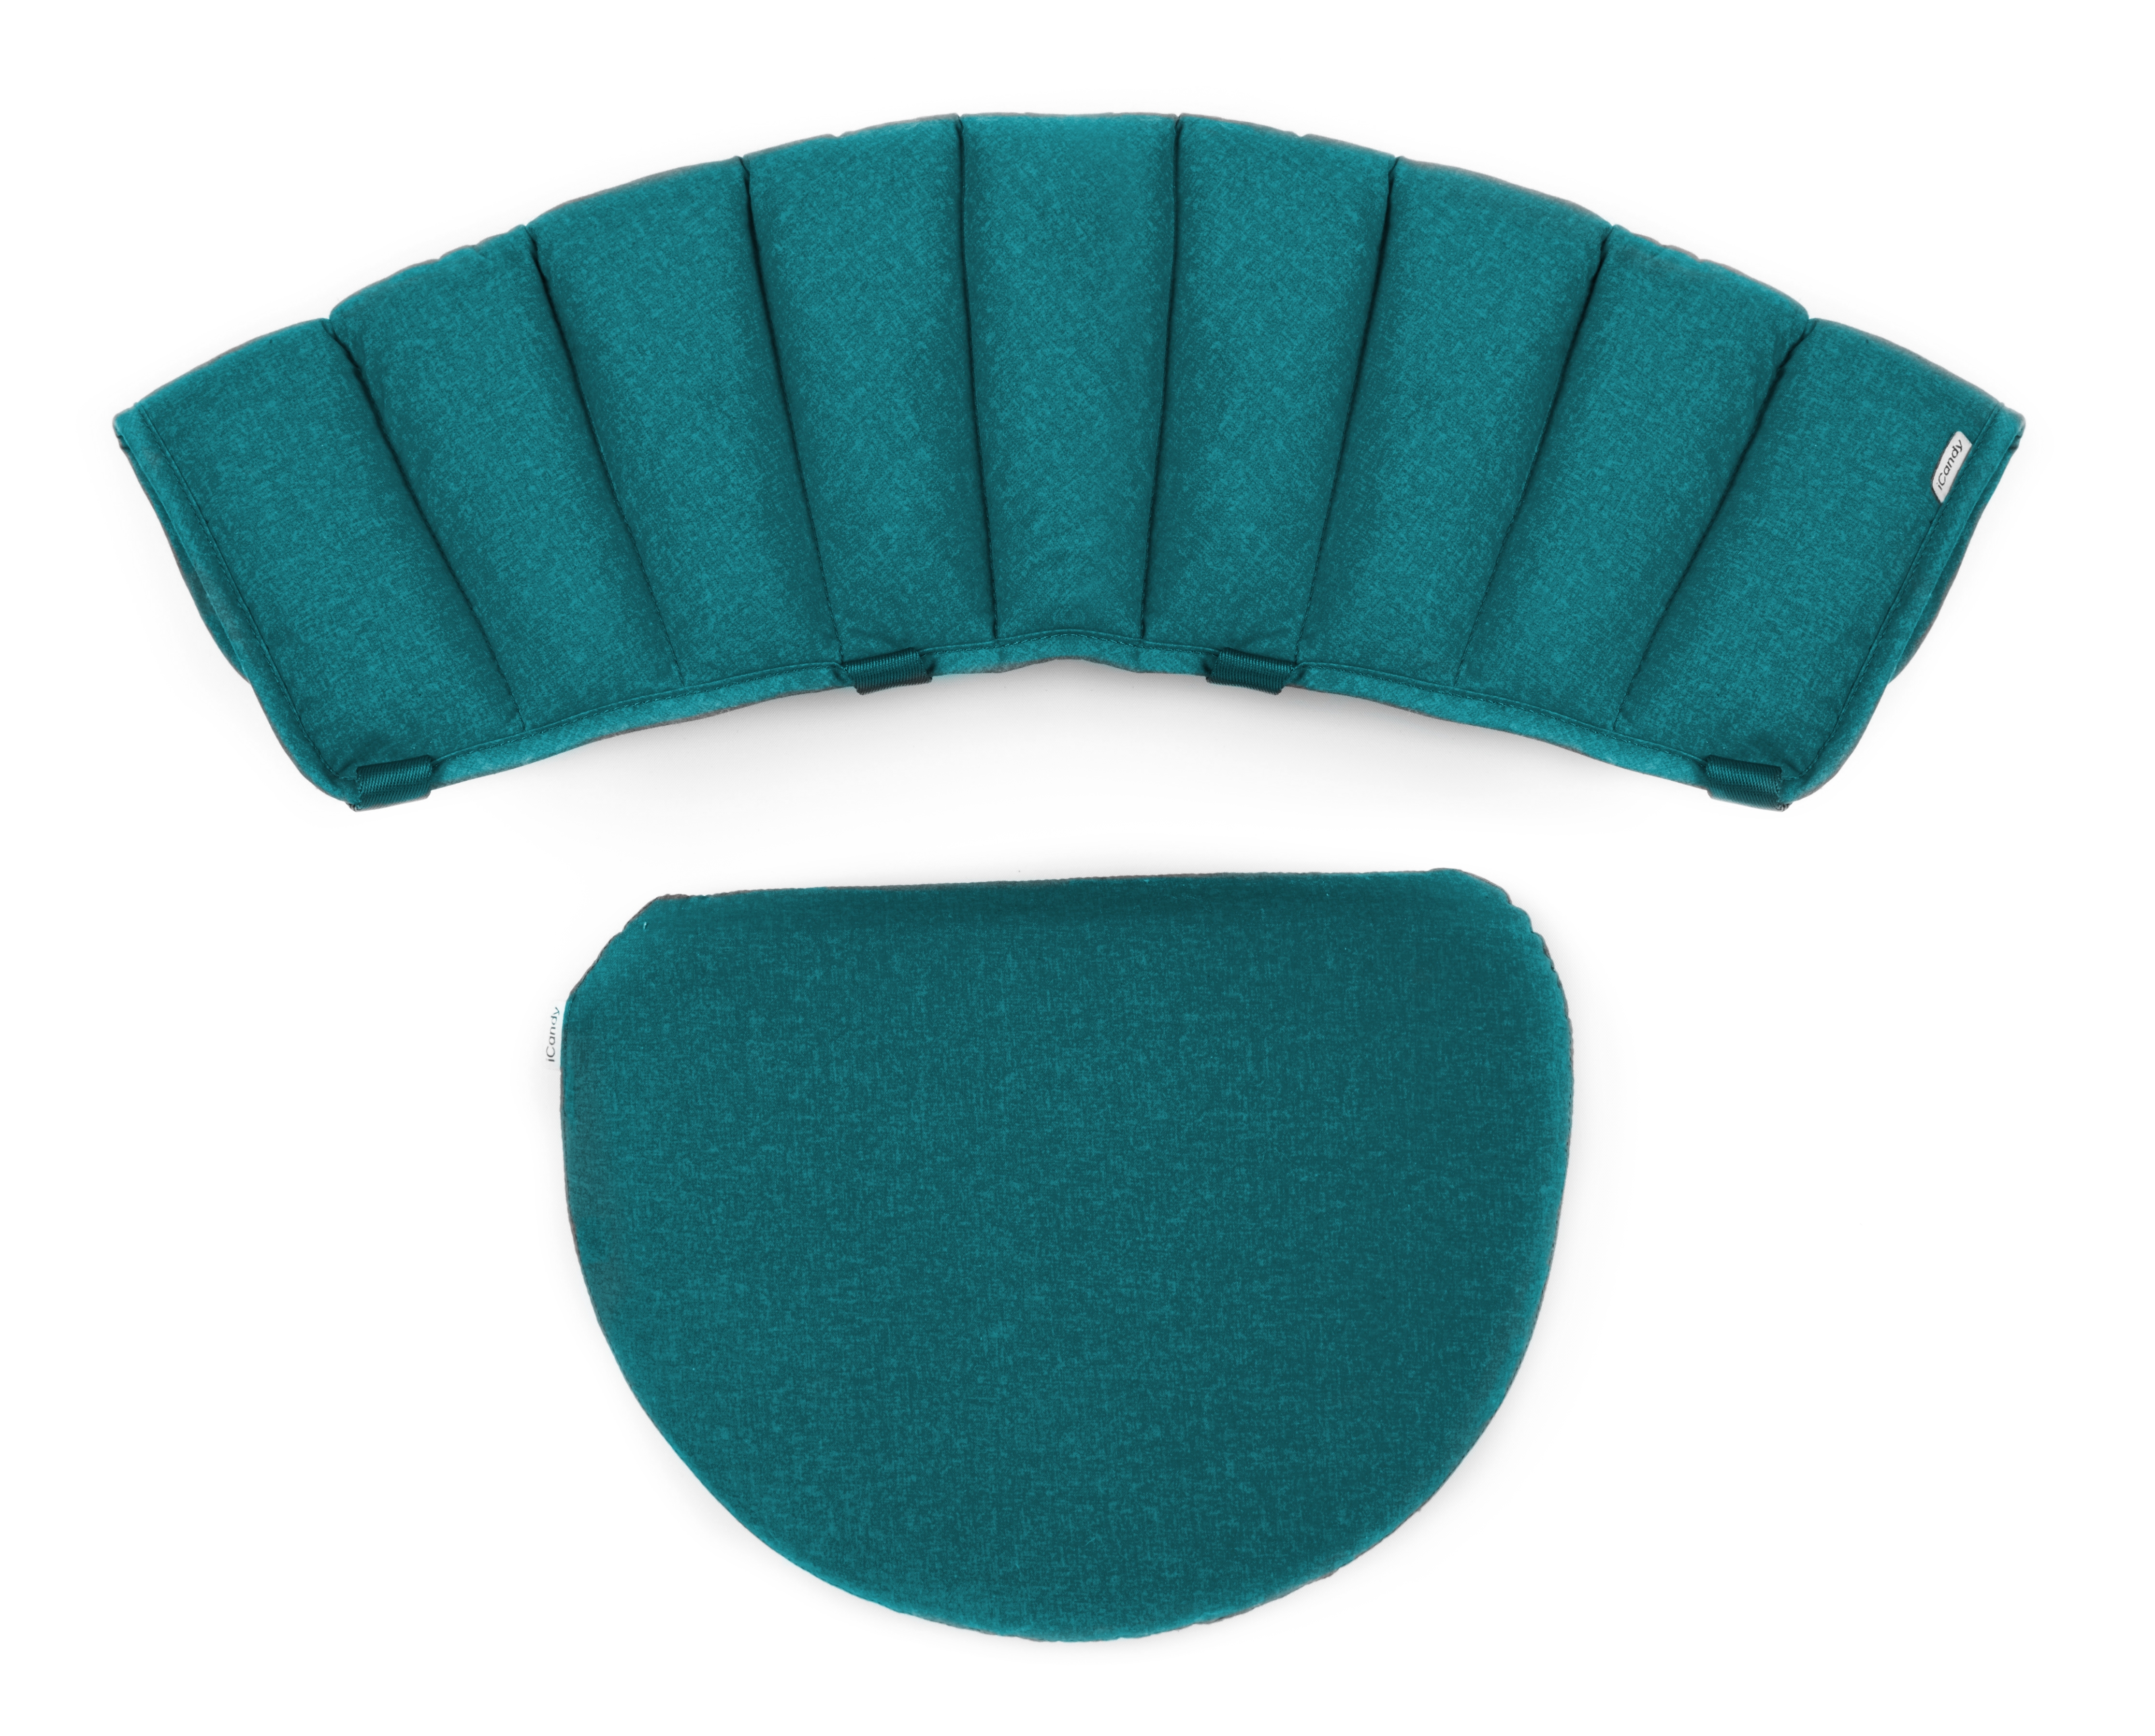 iCandy Mi-Chair Comfort Pack Blue *EX Display - Not in Original Box*